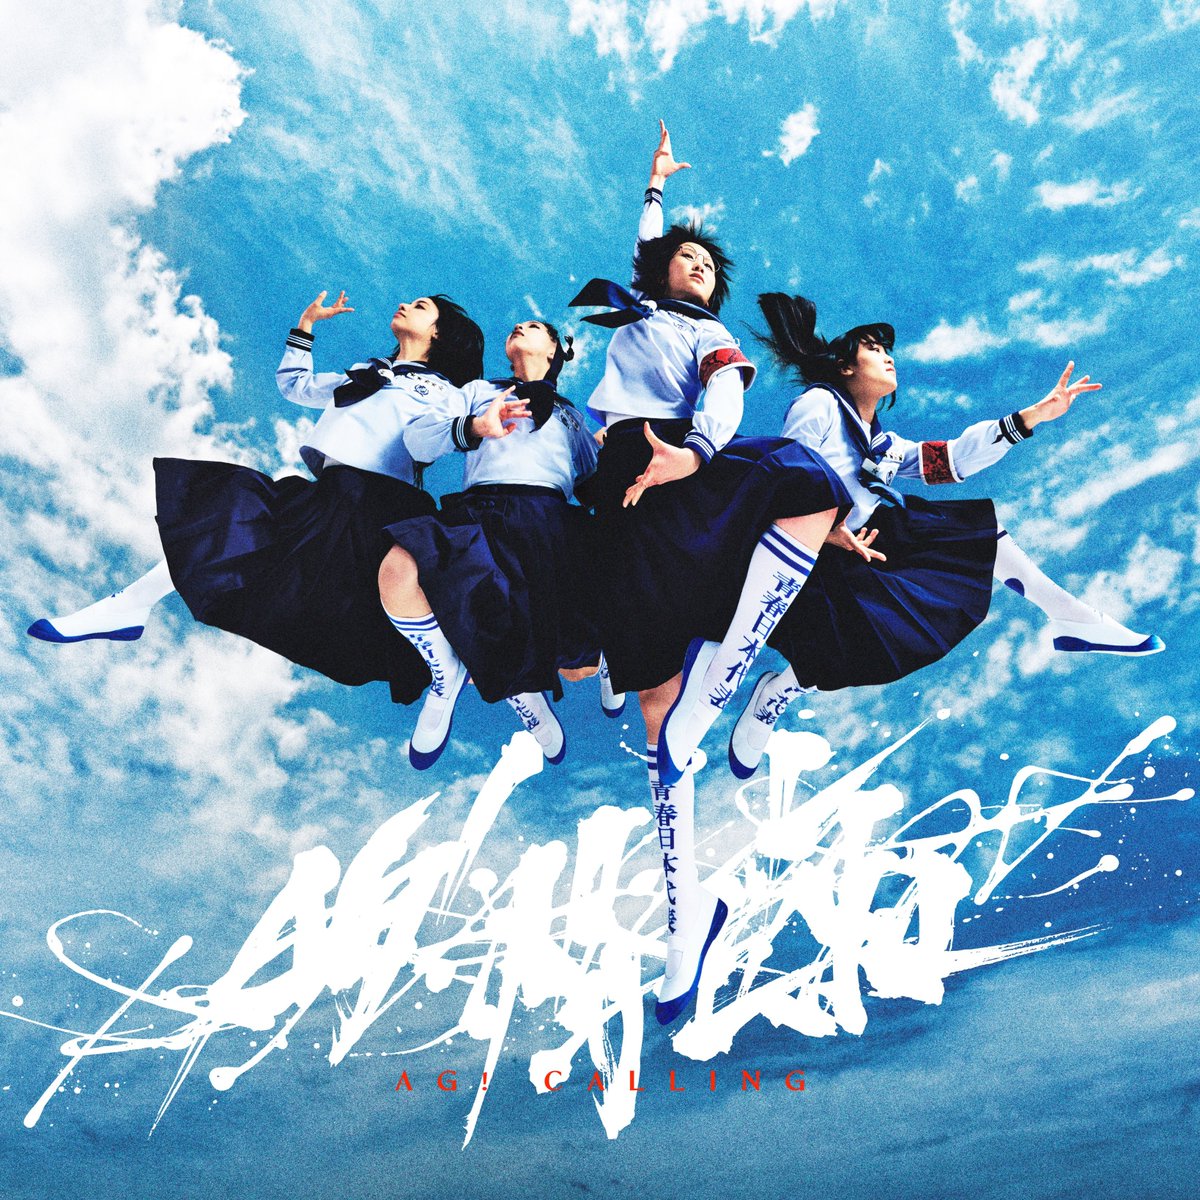 ATARASHII GAKKO! also known as ATARASHII GAKKOU NO LEADERS has announced the release of their upcoming album, which is set to release June 7th Pre-save at ATARASHIIGAKKO.lnk.to/AGCalling #新しい学校のリーダーズ @japanleaders